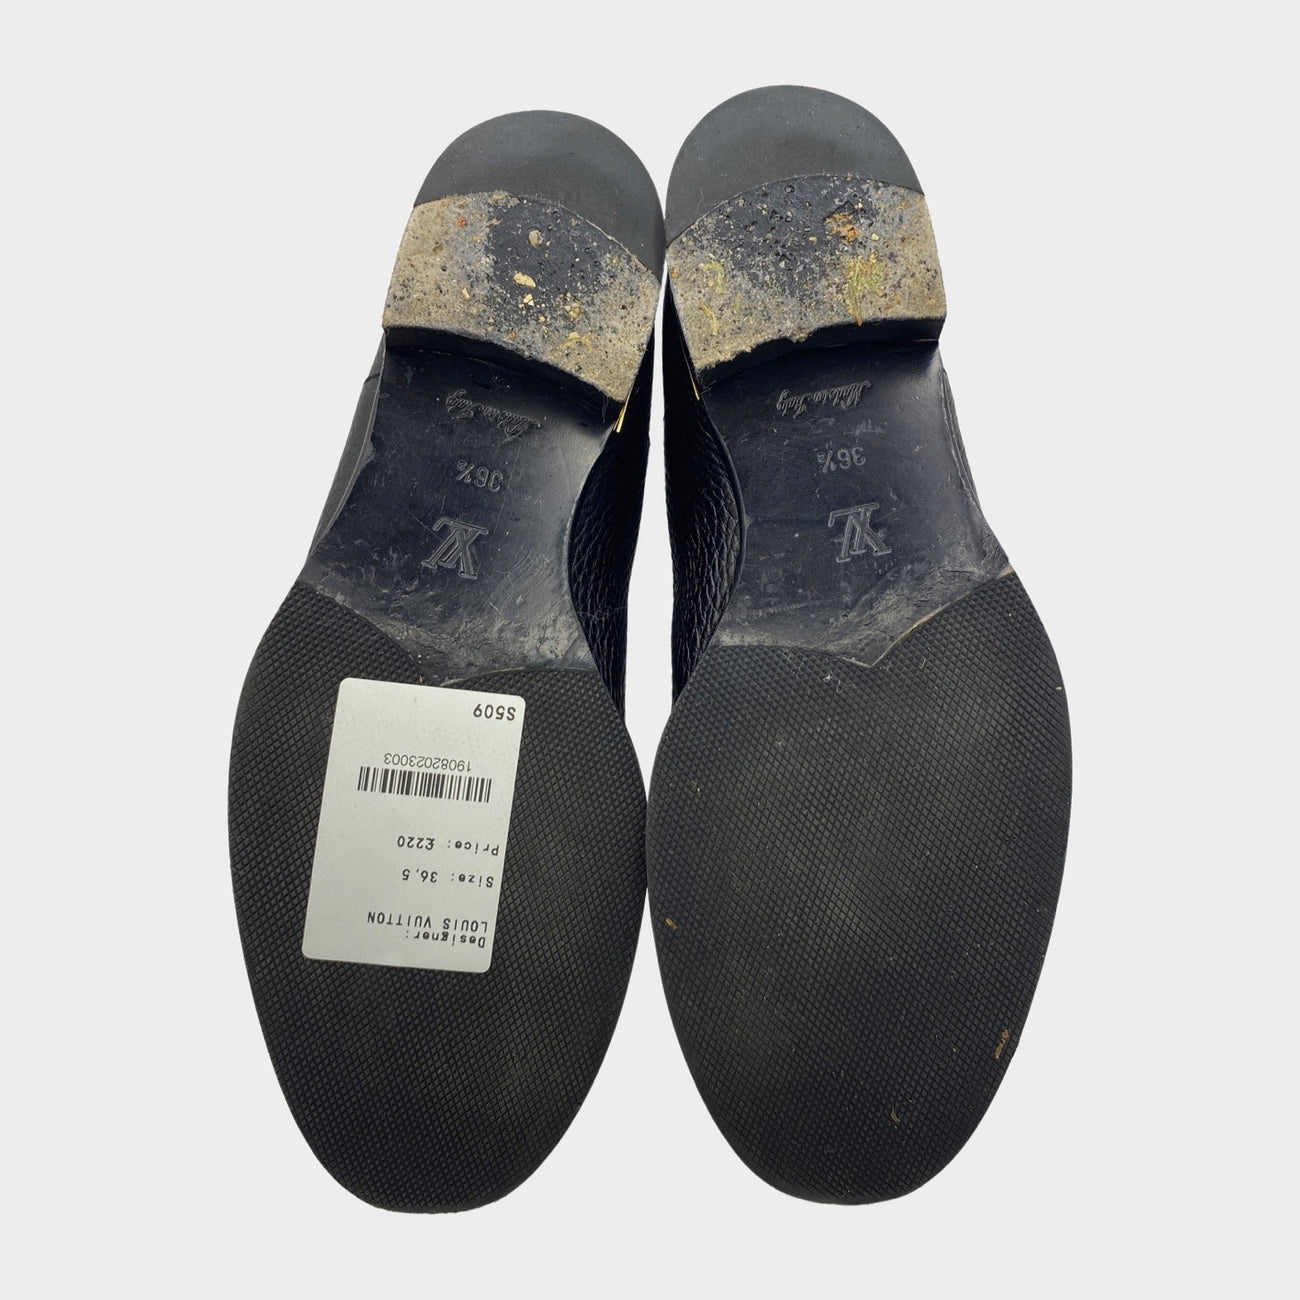 Louis Vuitton LV Record Chelsea Boot Cream. Size 41.0